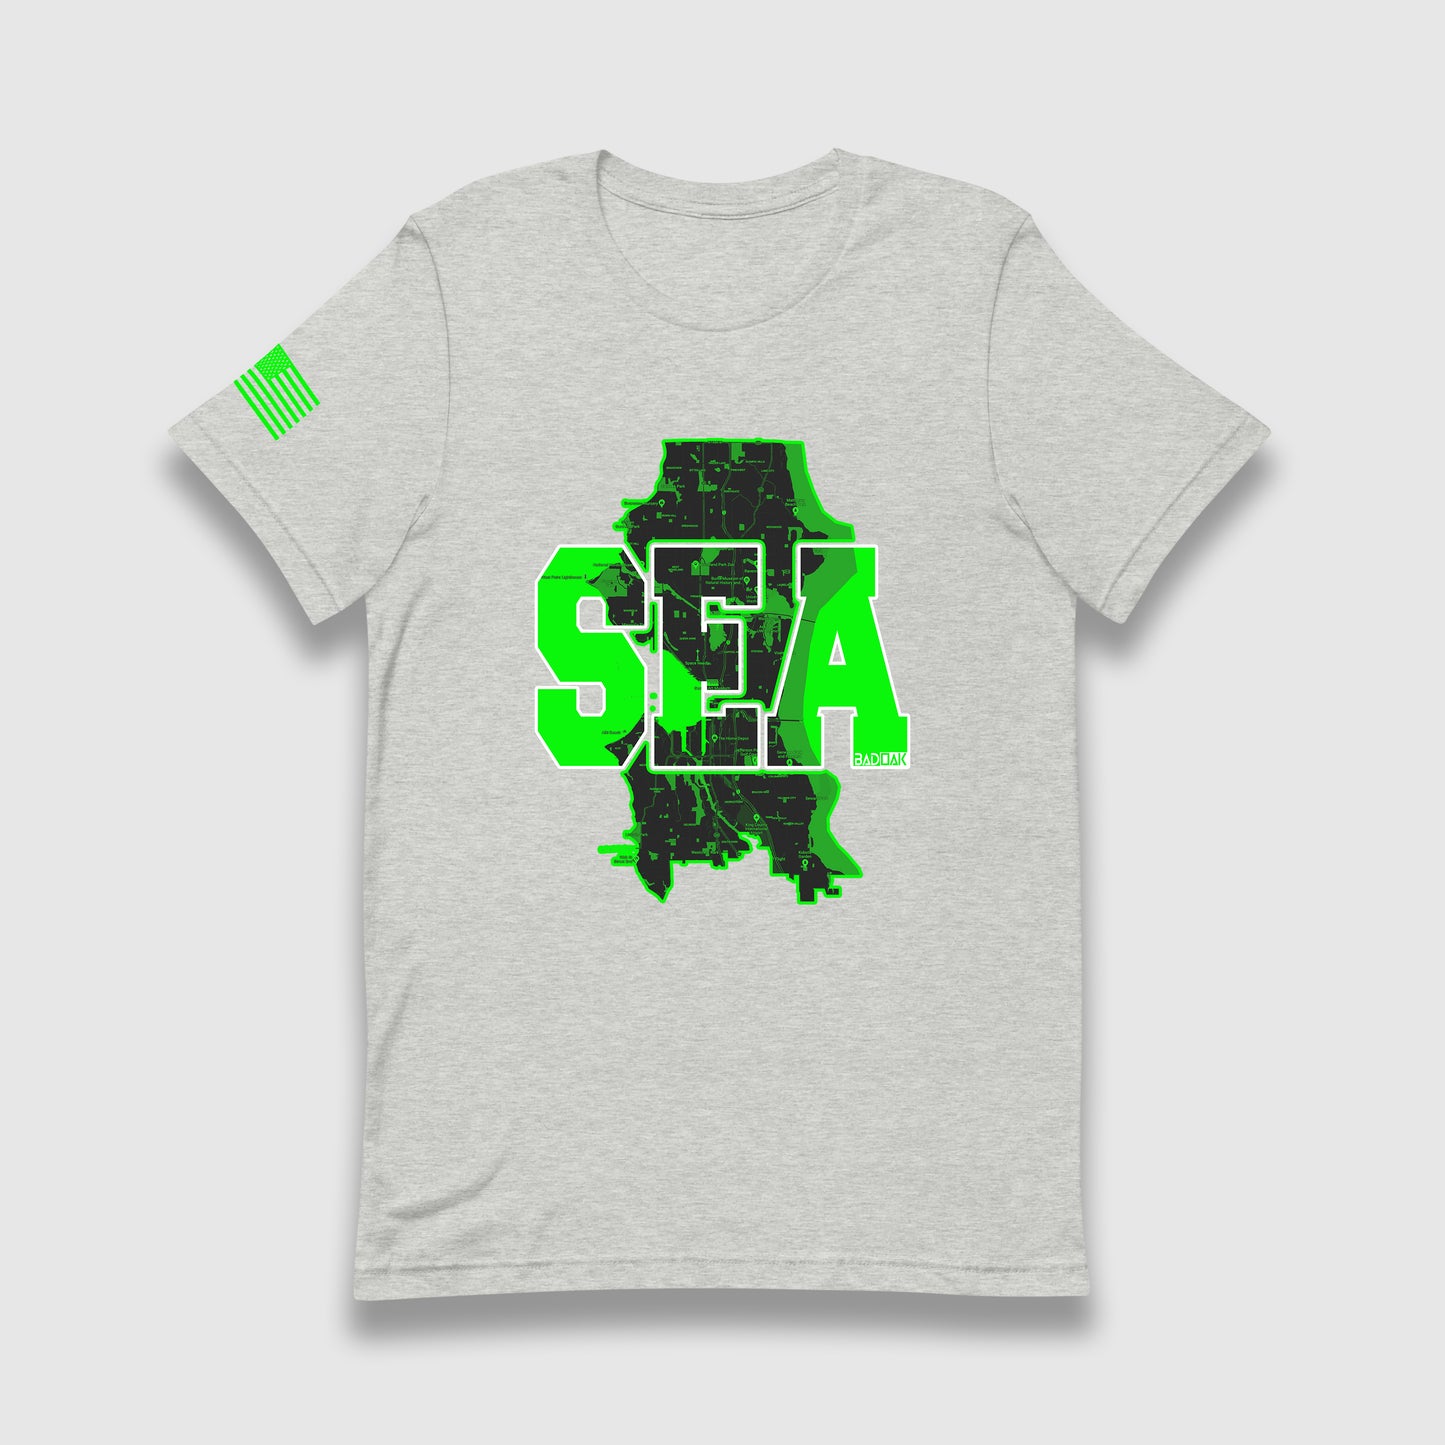 SEA (Seattle) Unisex T-Shirt - BAD OAK